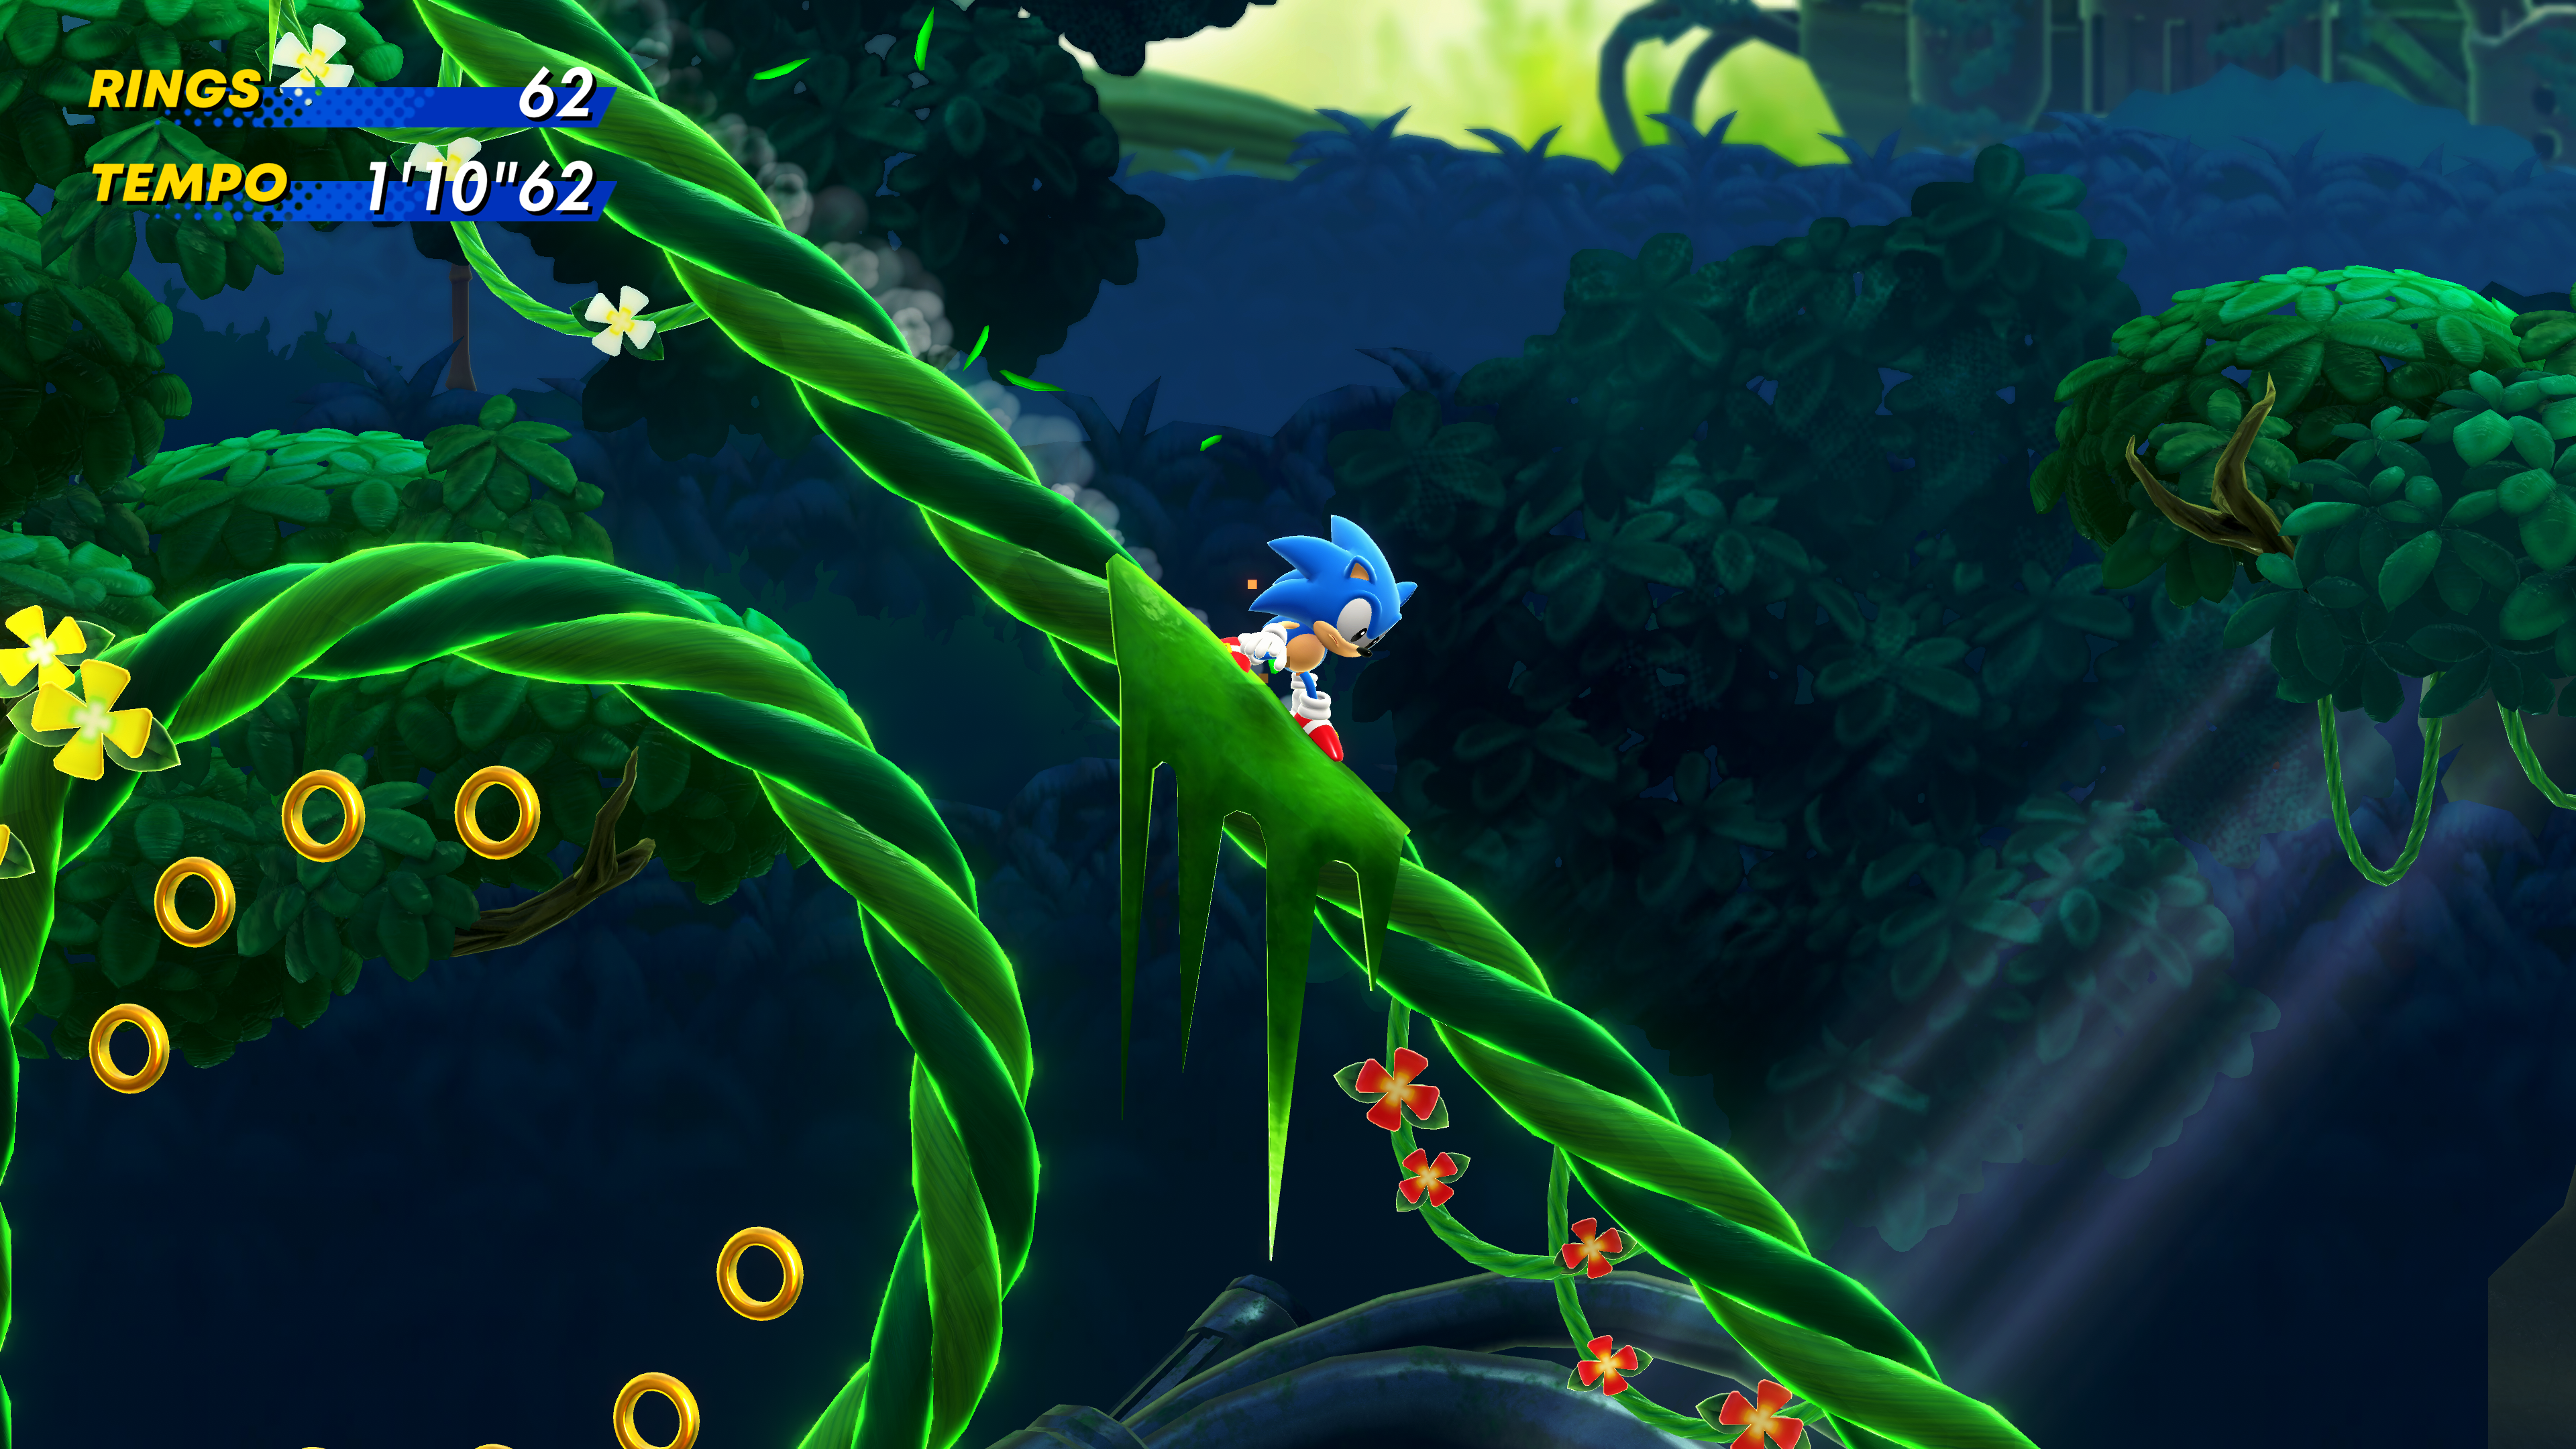 Sonic Superstars: Confira as músicas do novo game